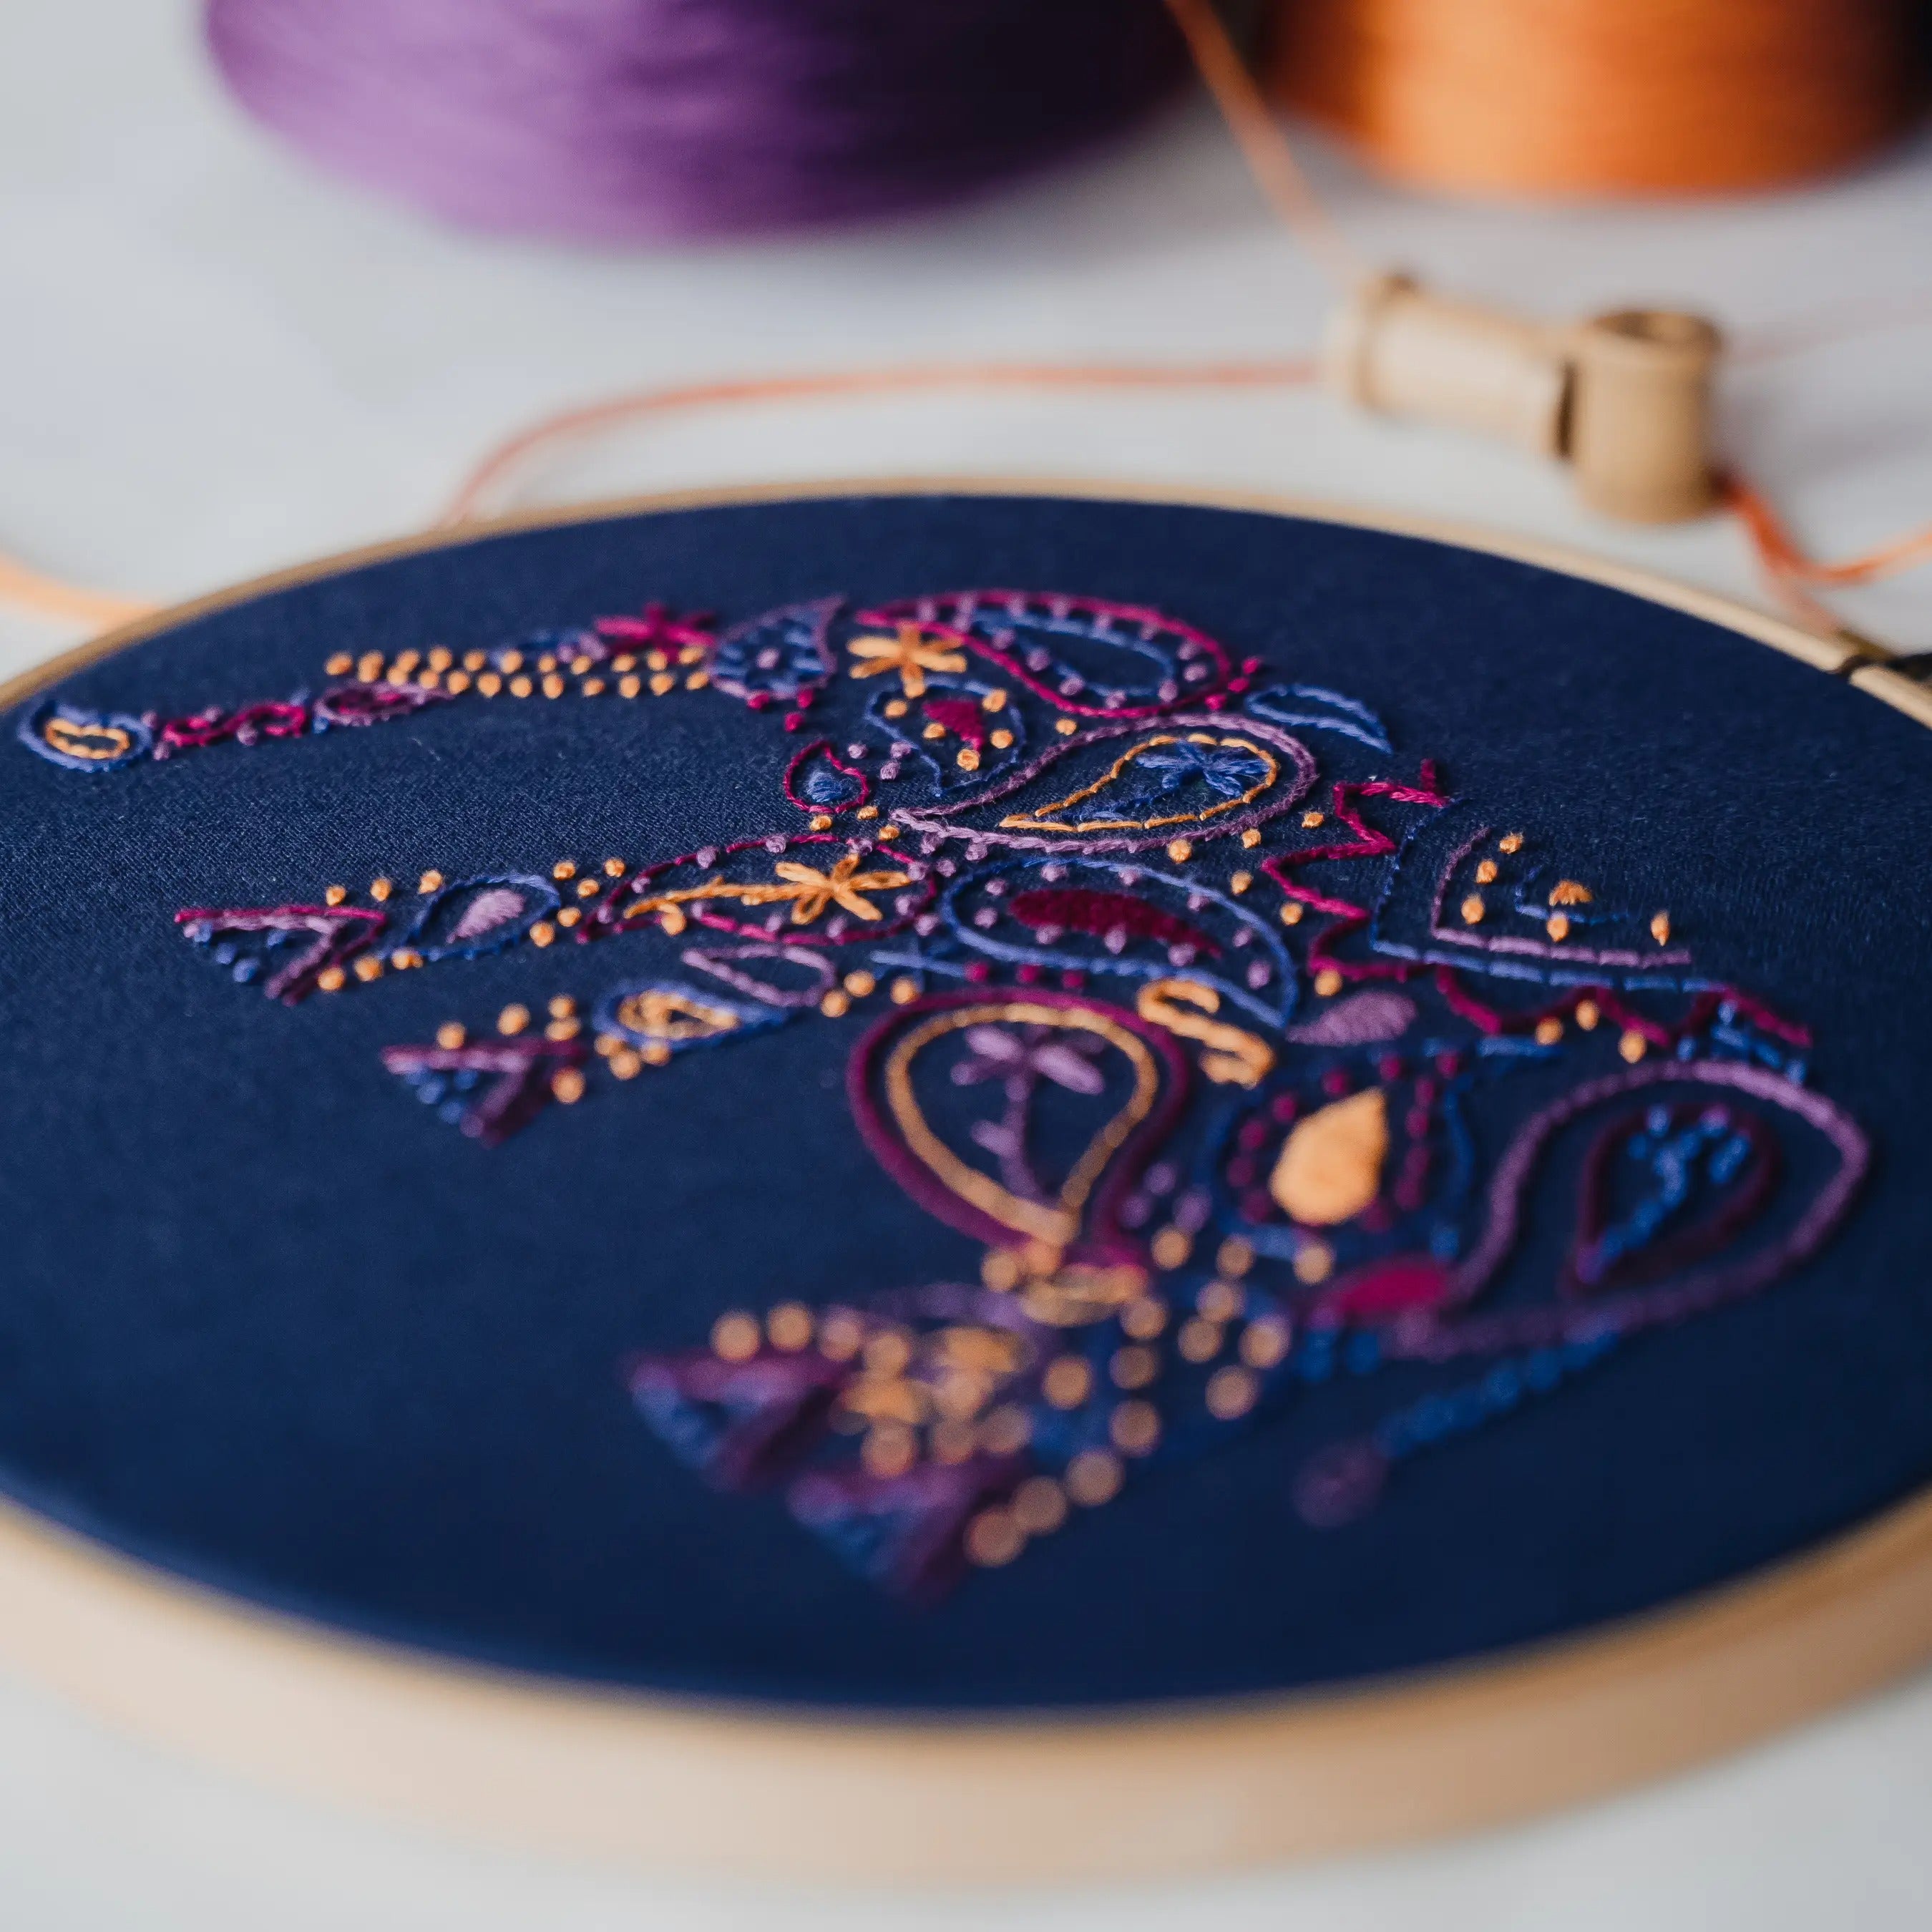 Sunrise Hand Embroidery Kit - Stitched Modern